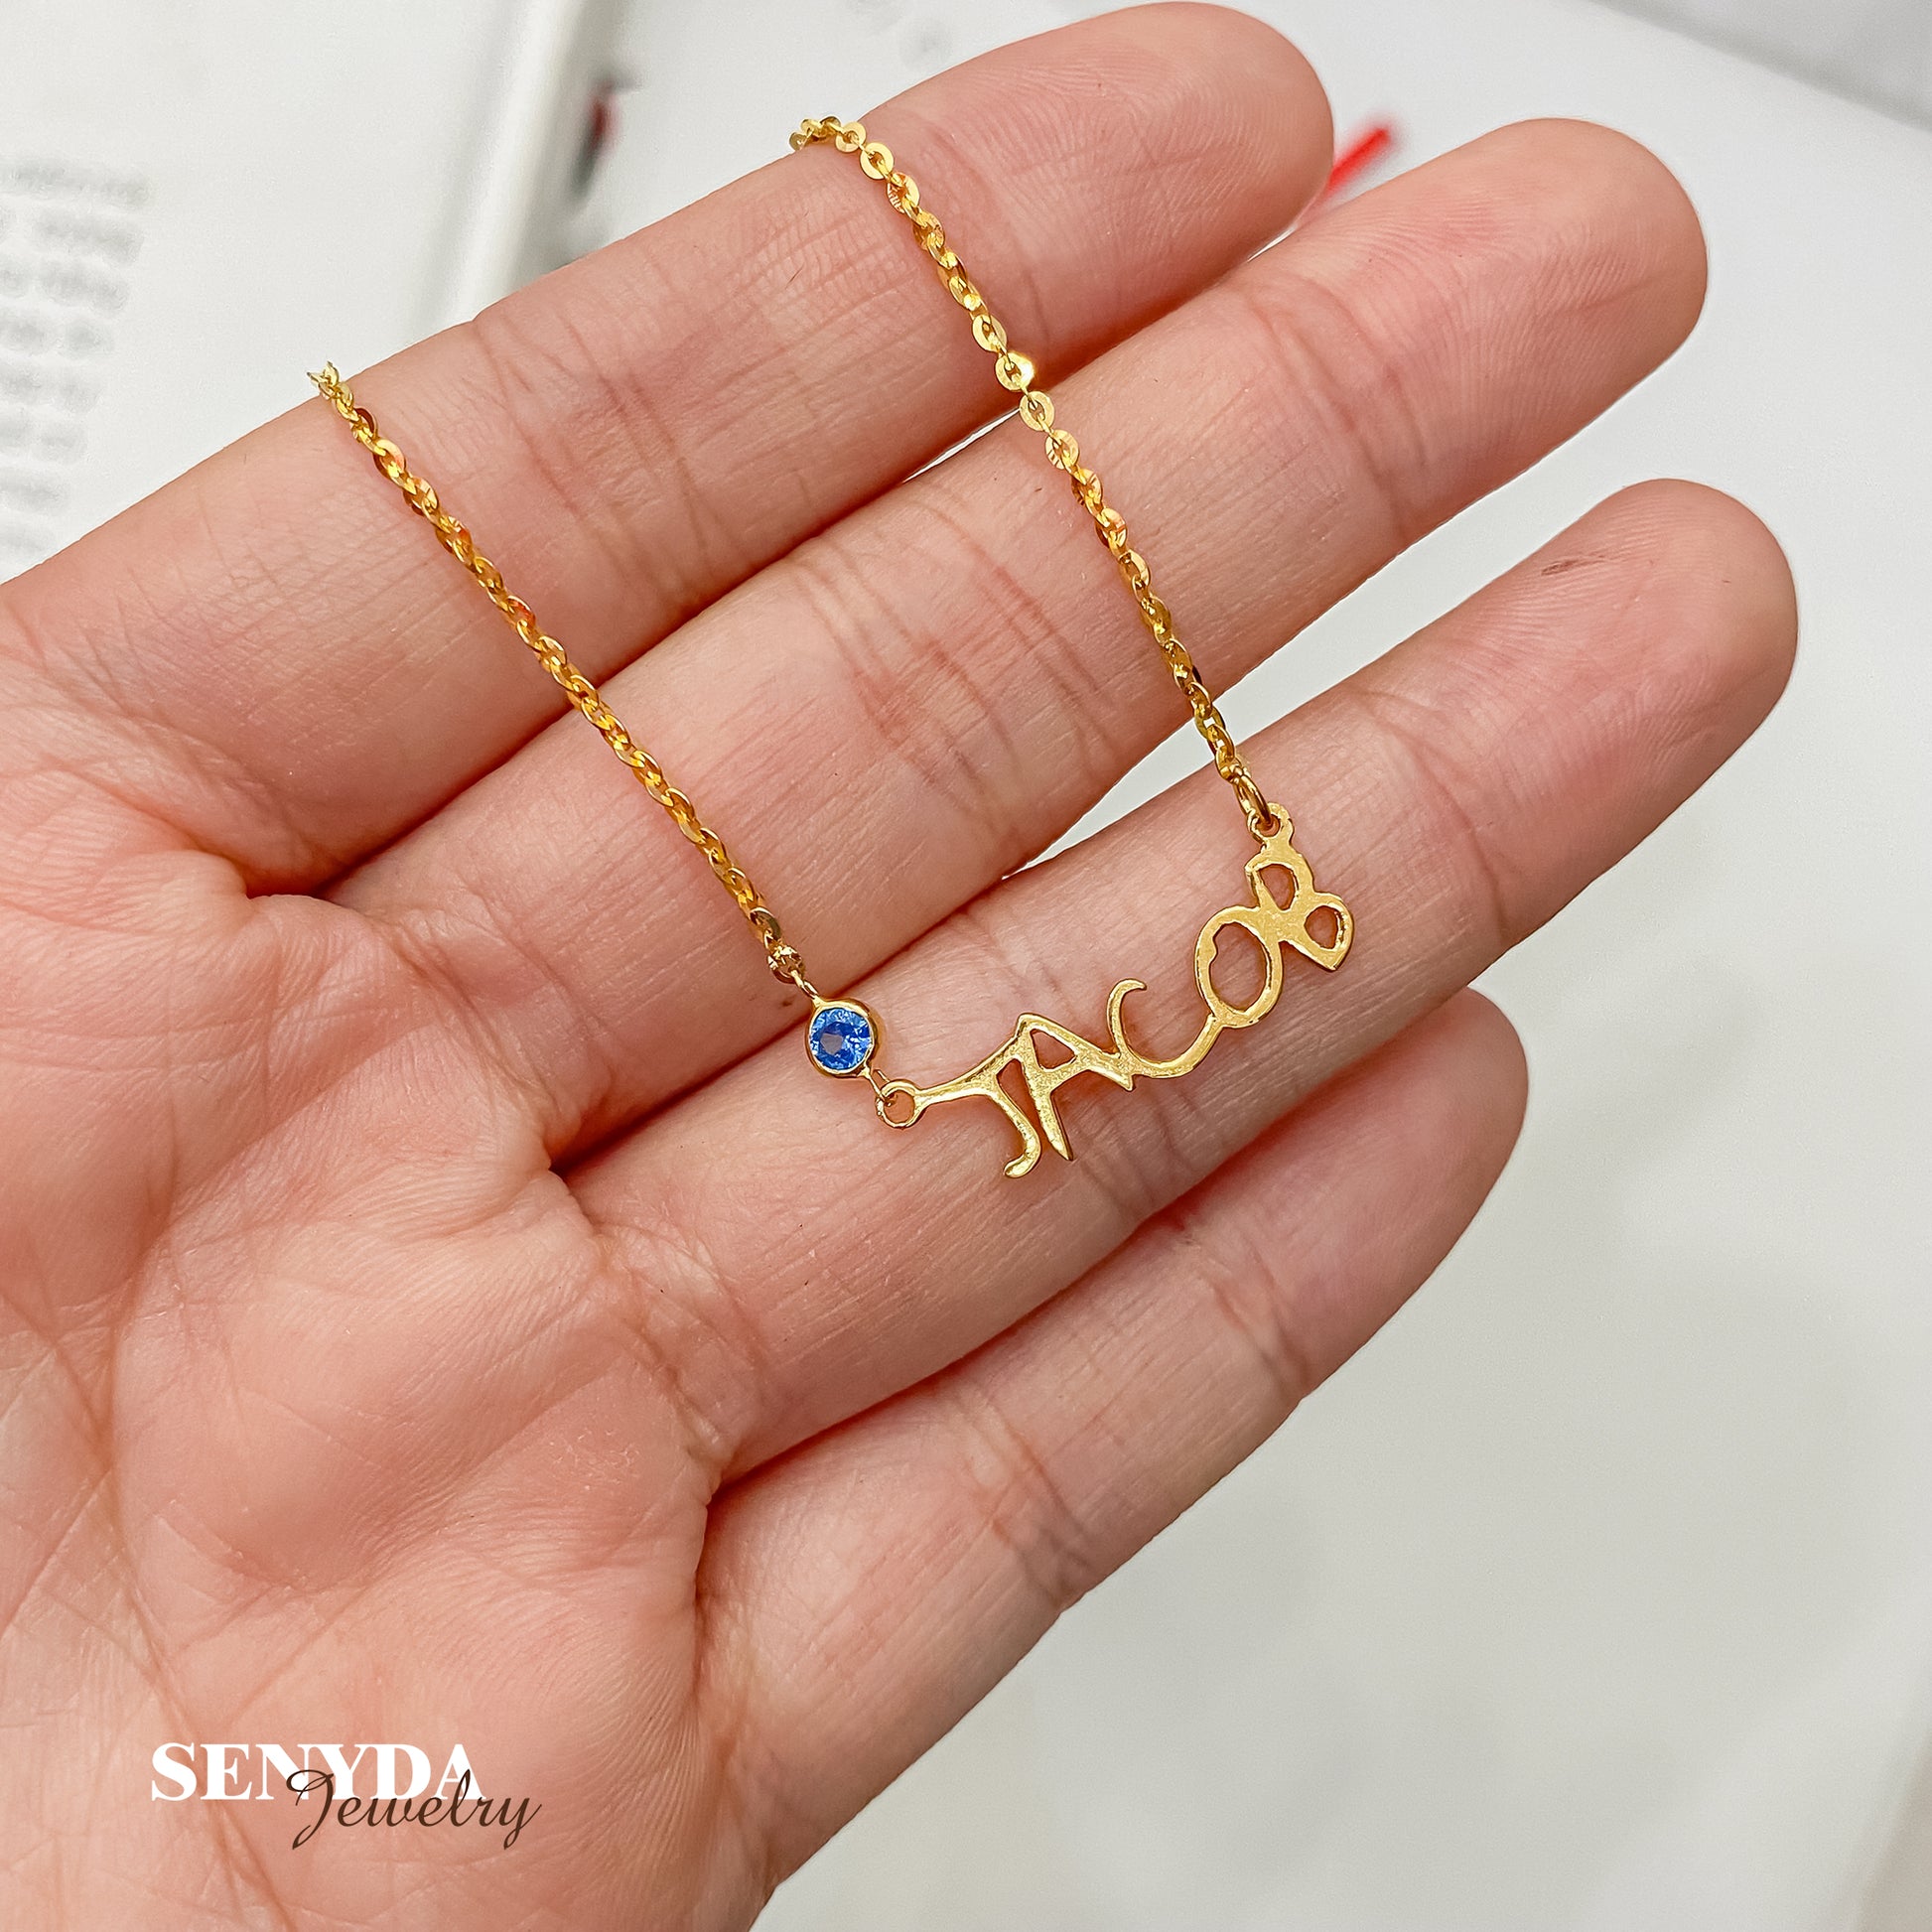 Senyda Tiny Dream Name Necklace with Birthday Stone